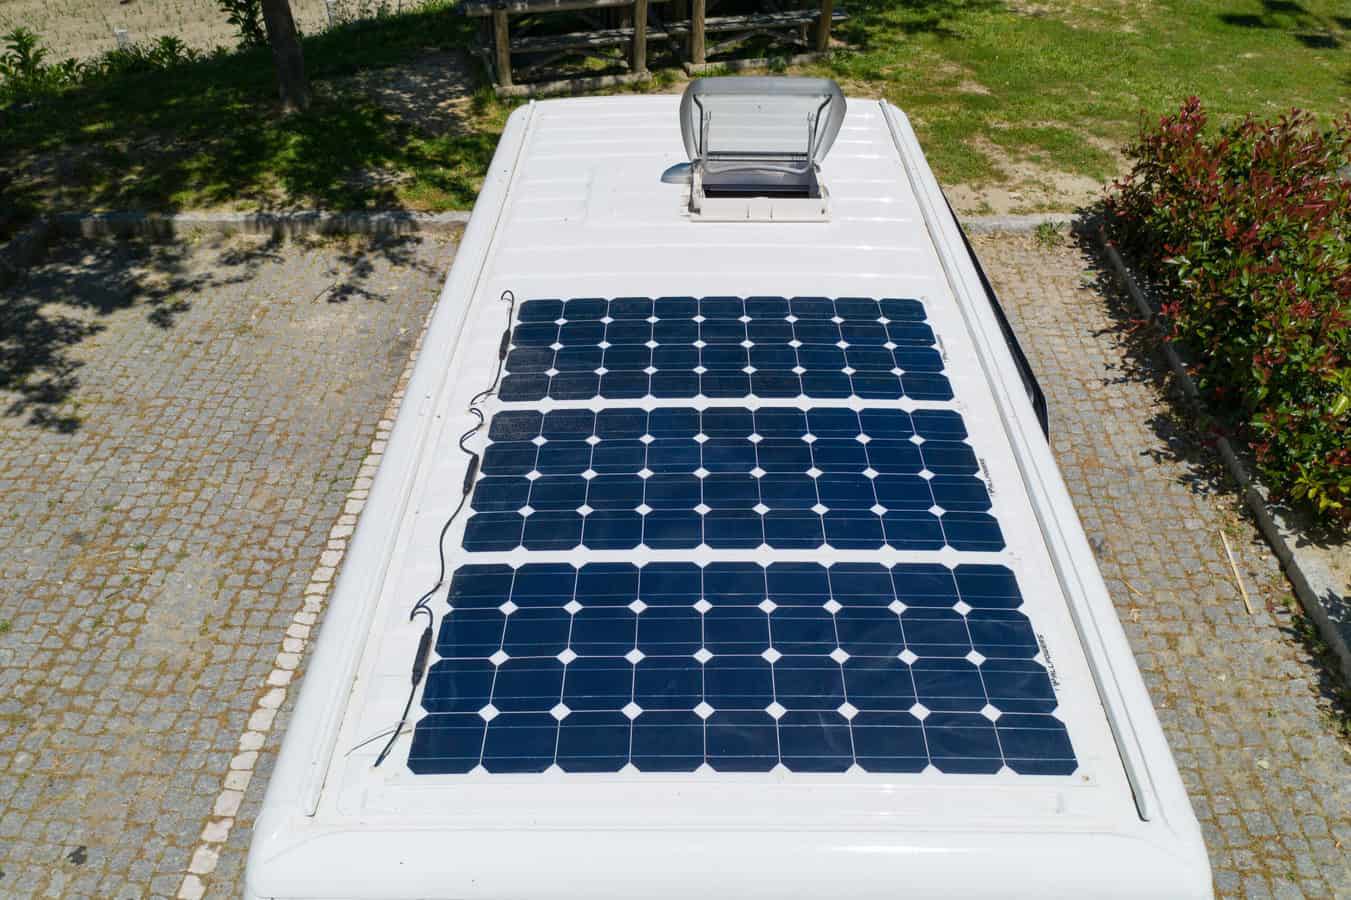 installation of solar panels on a campervan